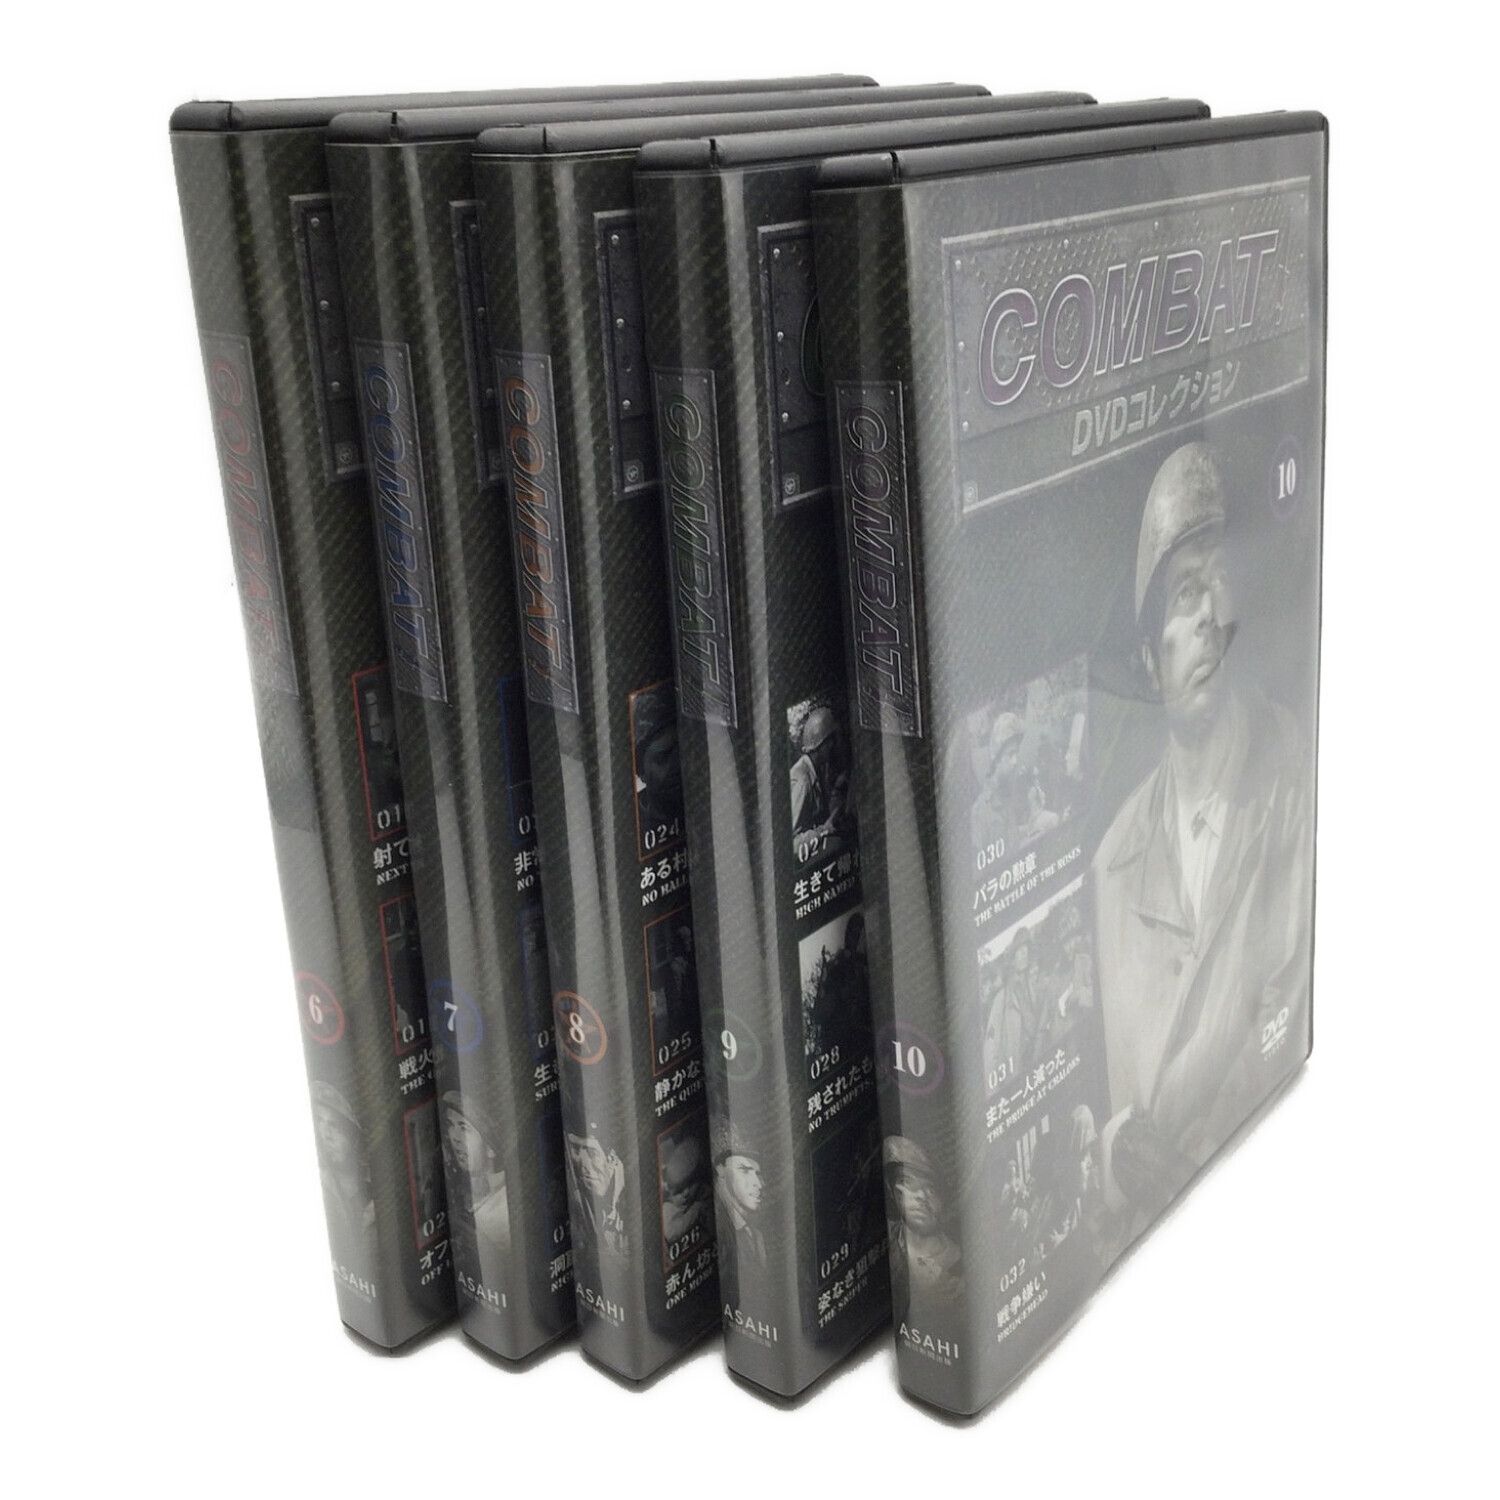 COMBAT DVDコレクション 全50巻 - TVドラマ